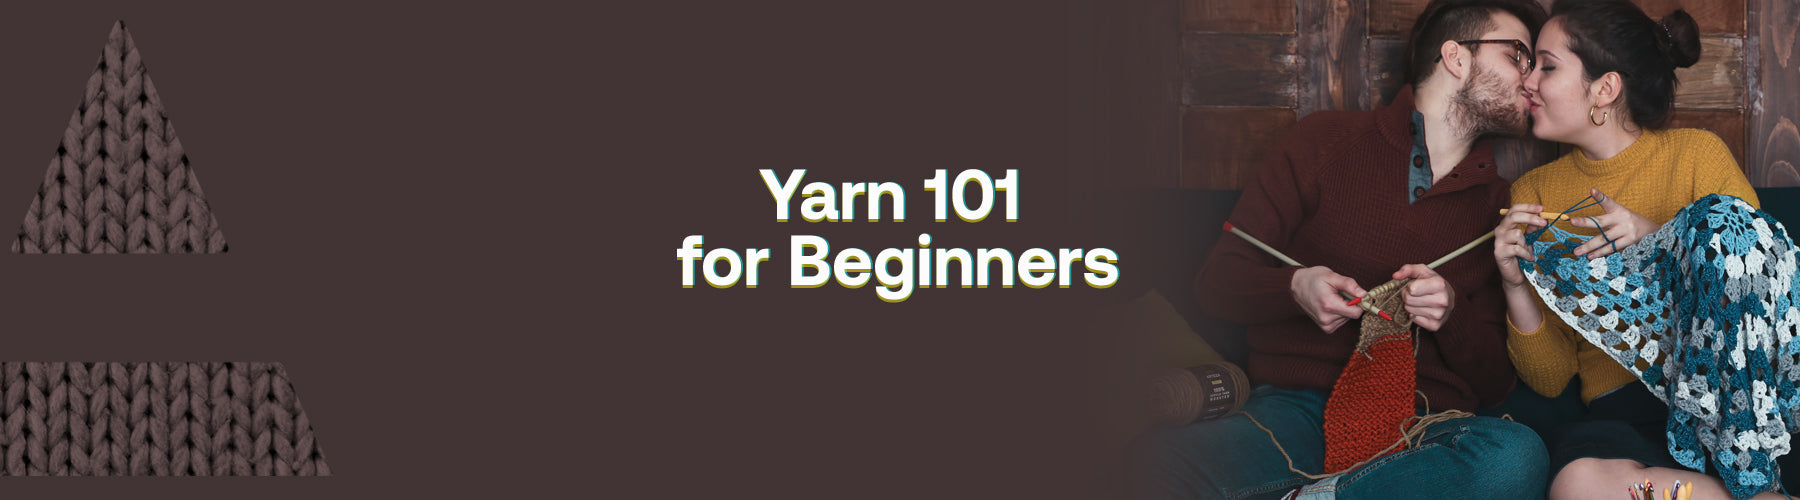 Yarn 101 for Beginners